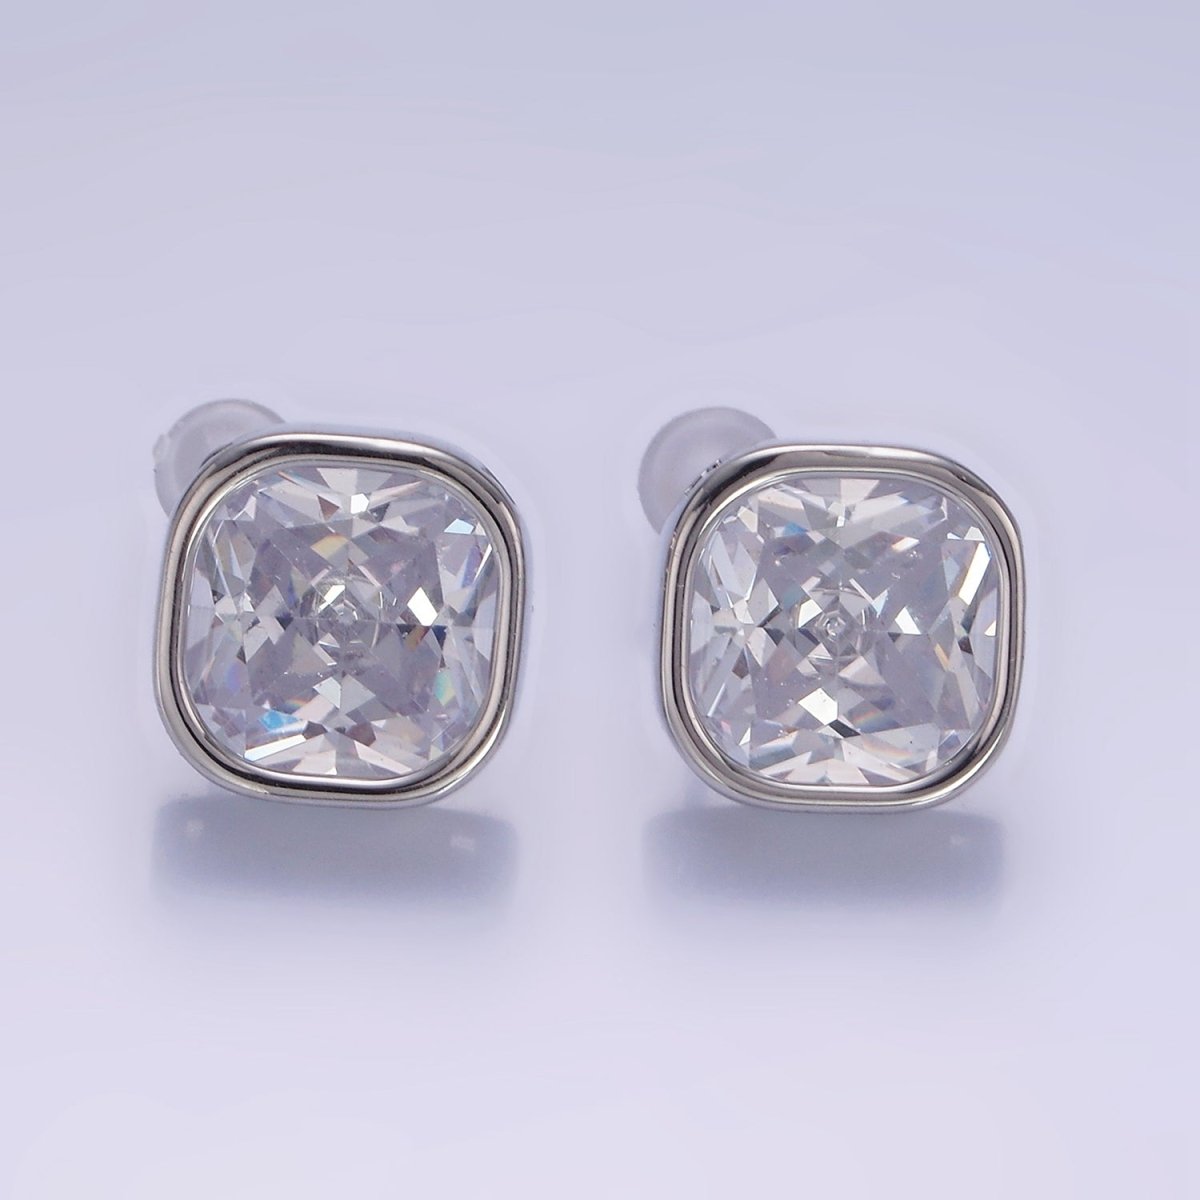 10mm Clear CZ Square Bezel Stud Earrings in Gold & Silver | V514 V515 - DLUXCA